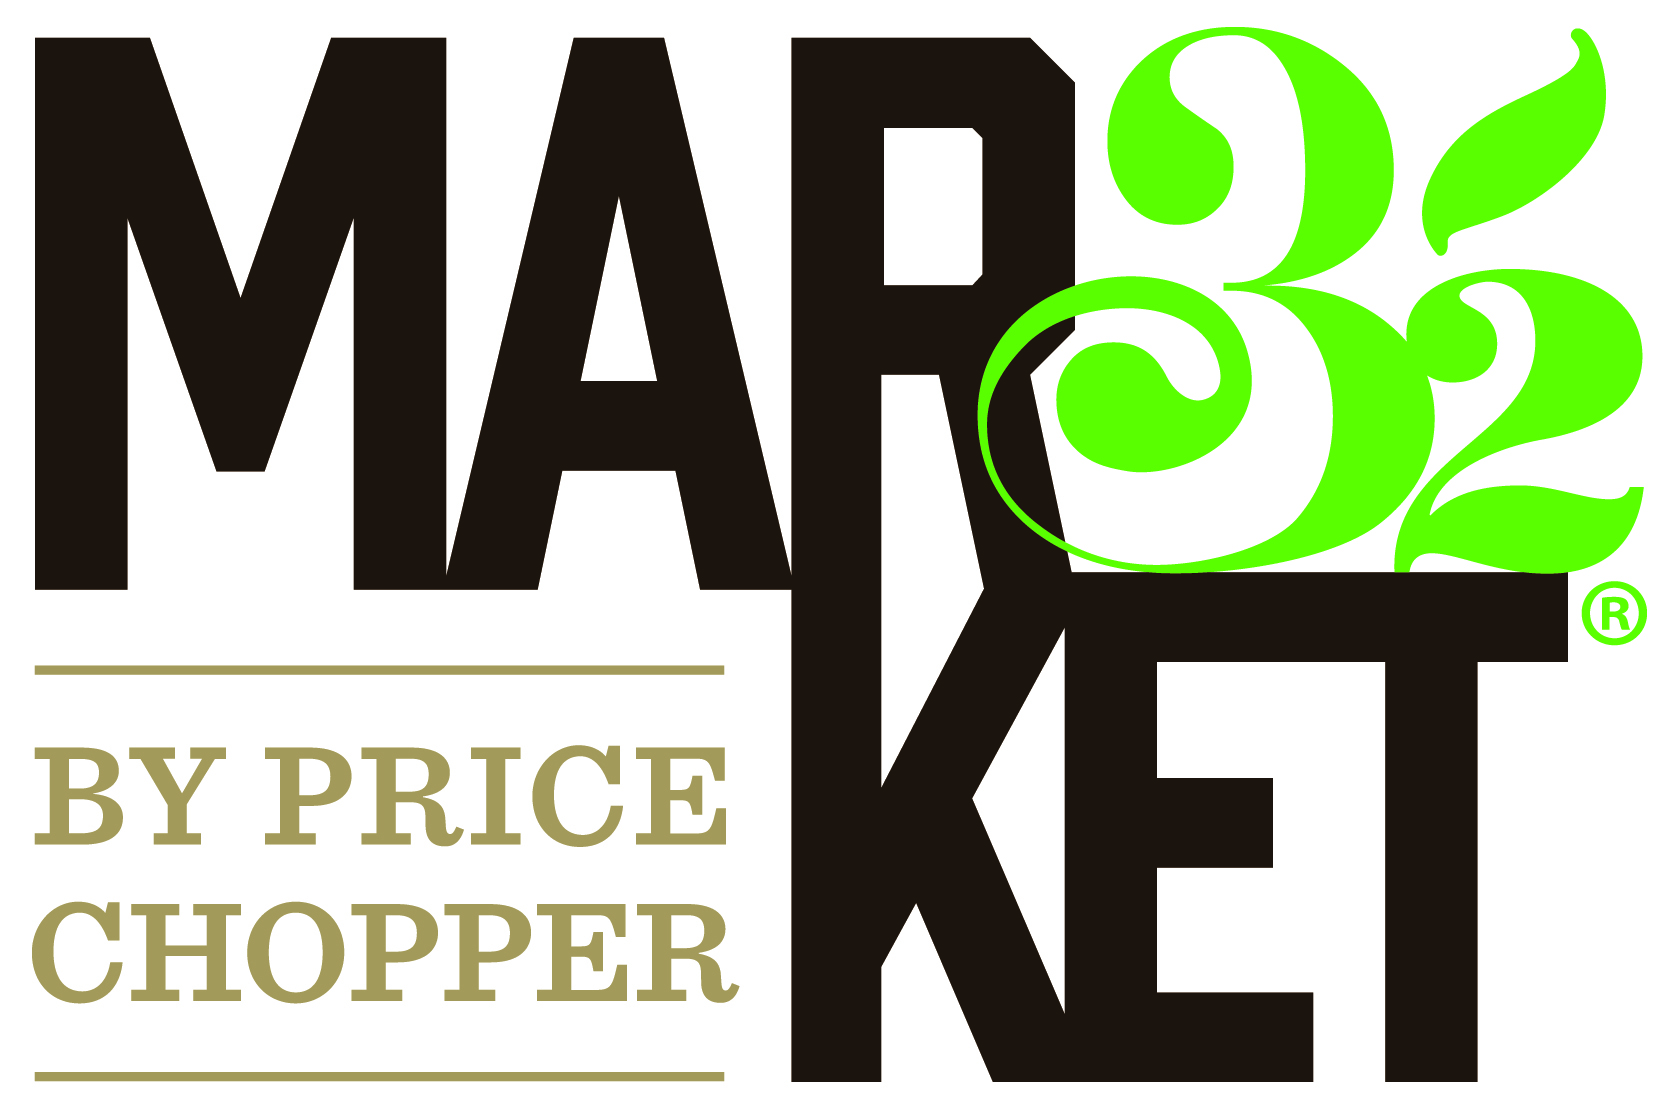 Market 32 by Price Chopper Logo.jpg